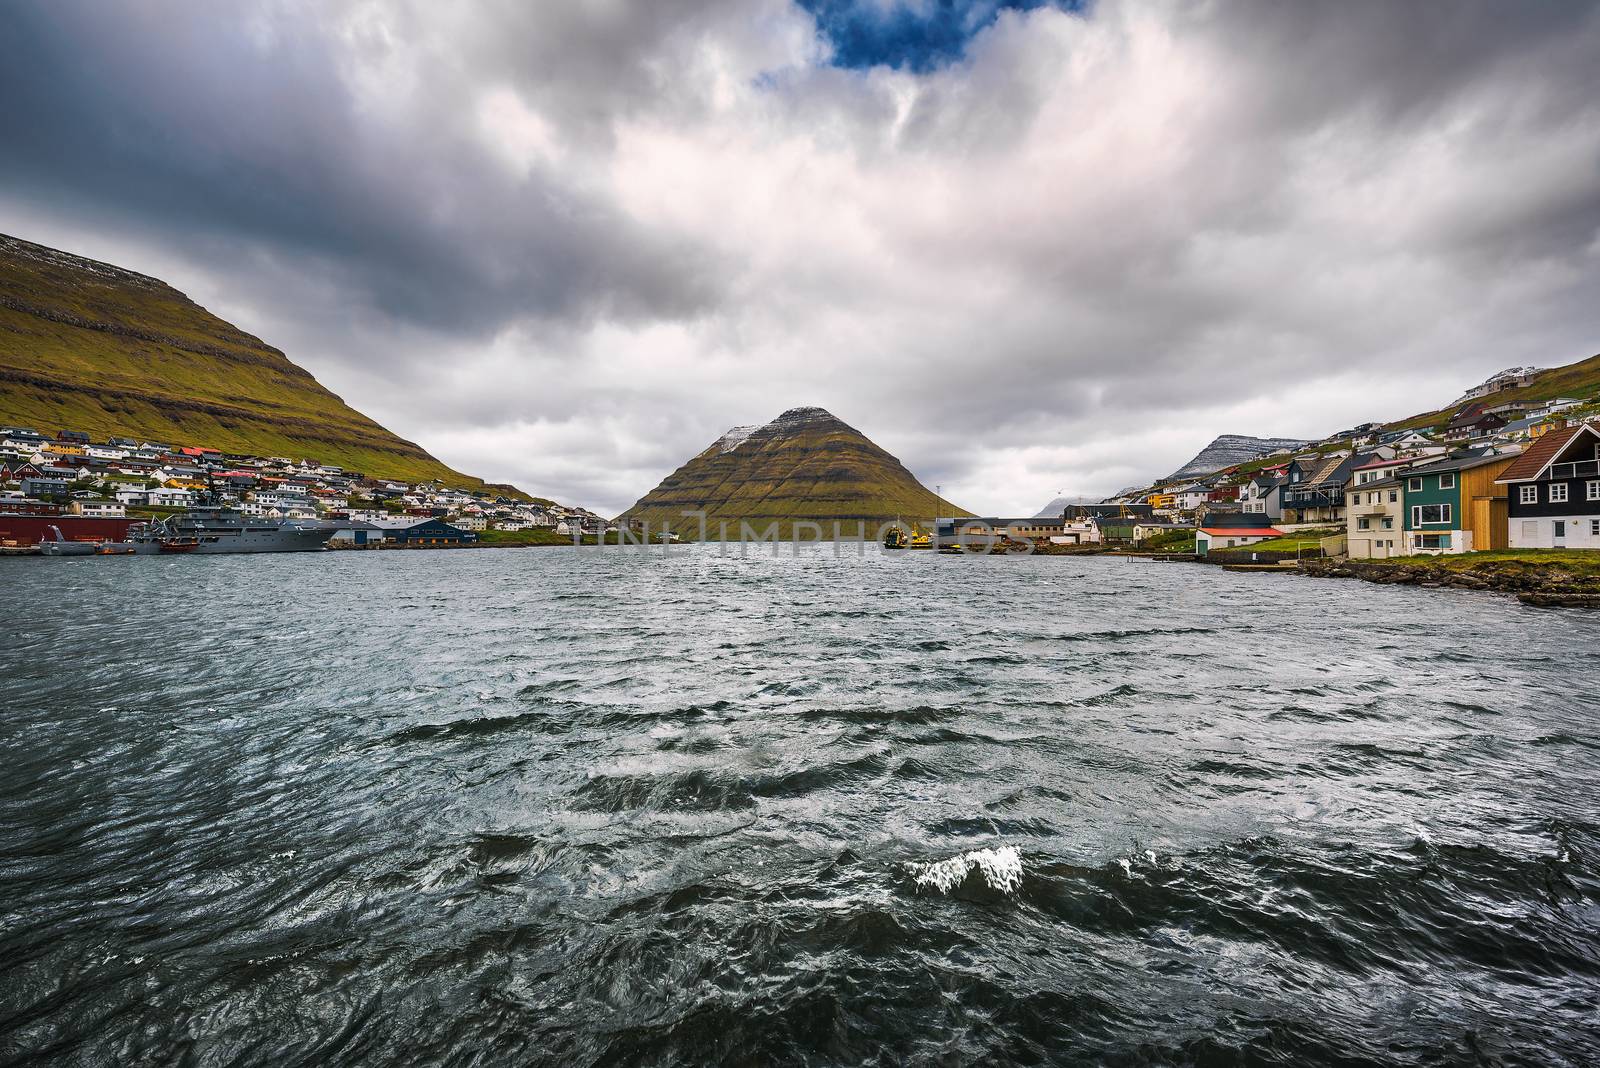 The island of Kunoy viewed from city of Klaksvik in the Faroe Islands, Denmark.